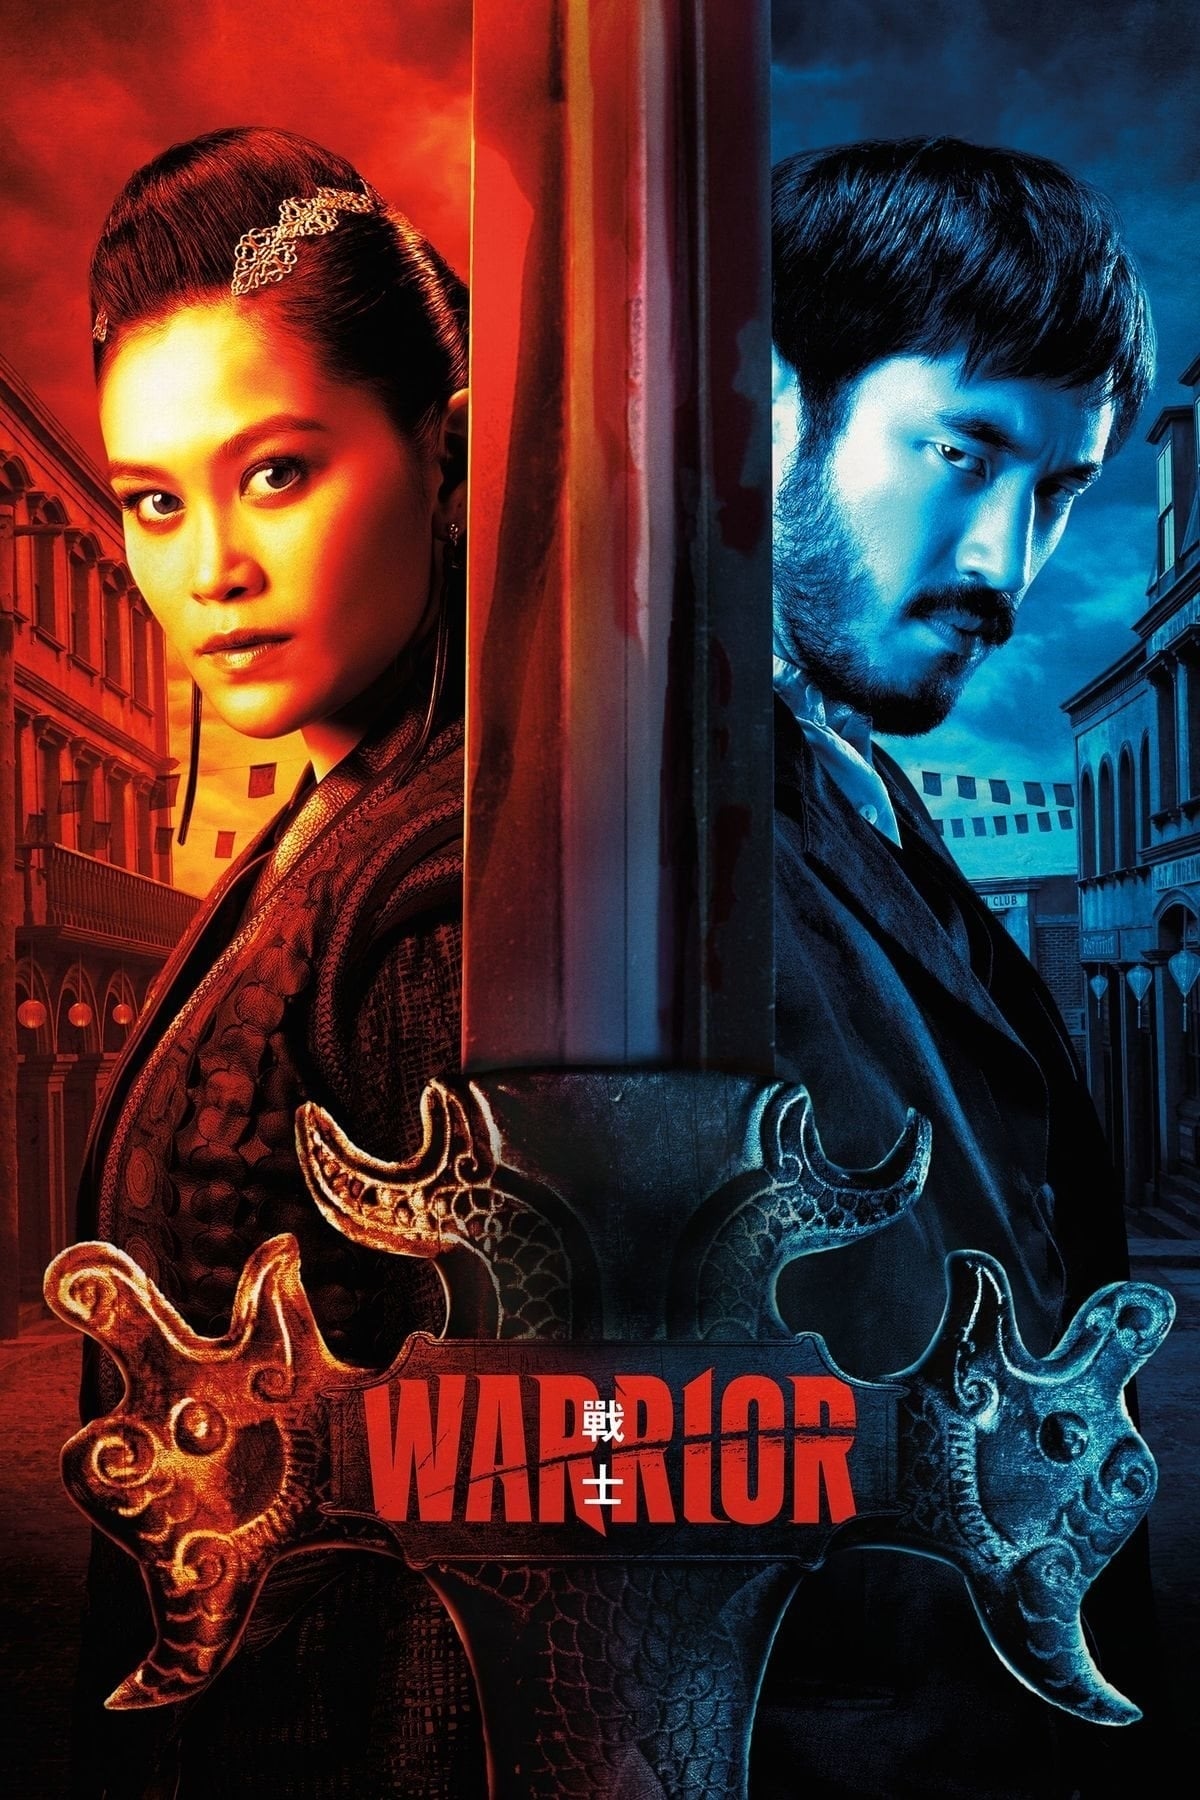 Chiến Binh (Phần 2) (Warrior (Season 2)) [2020]